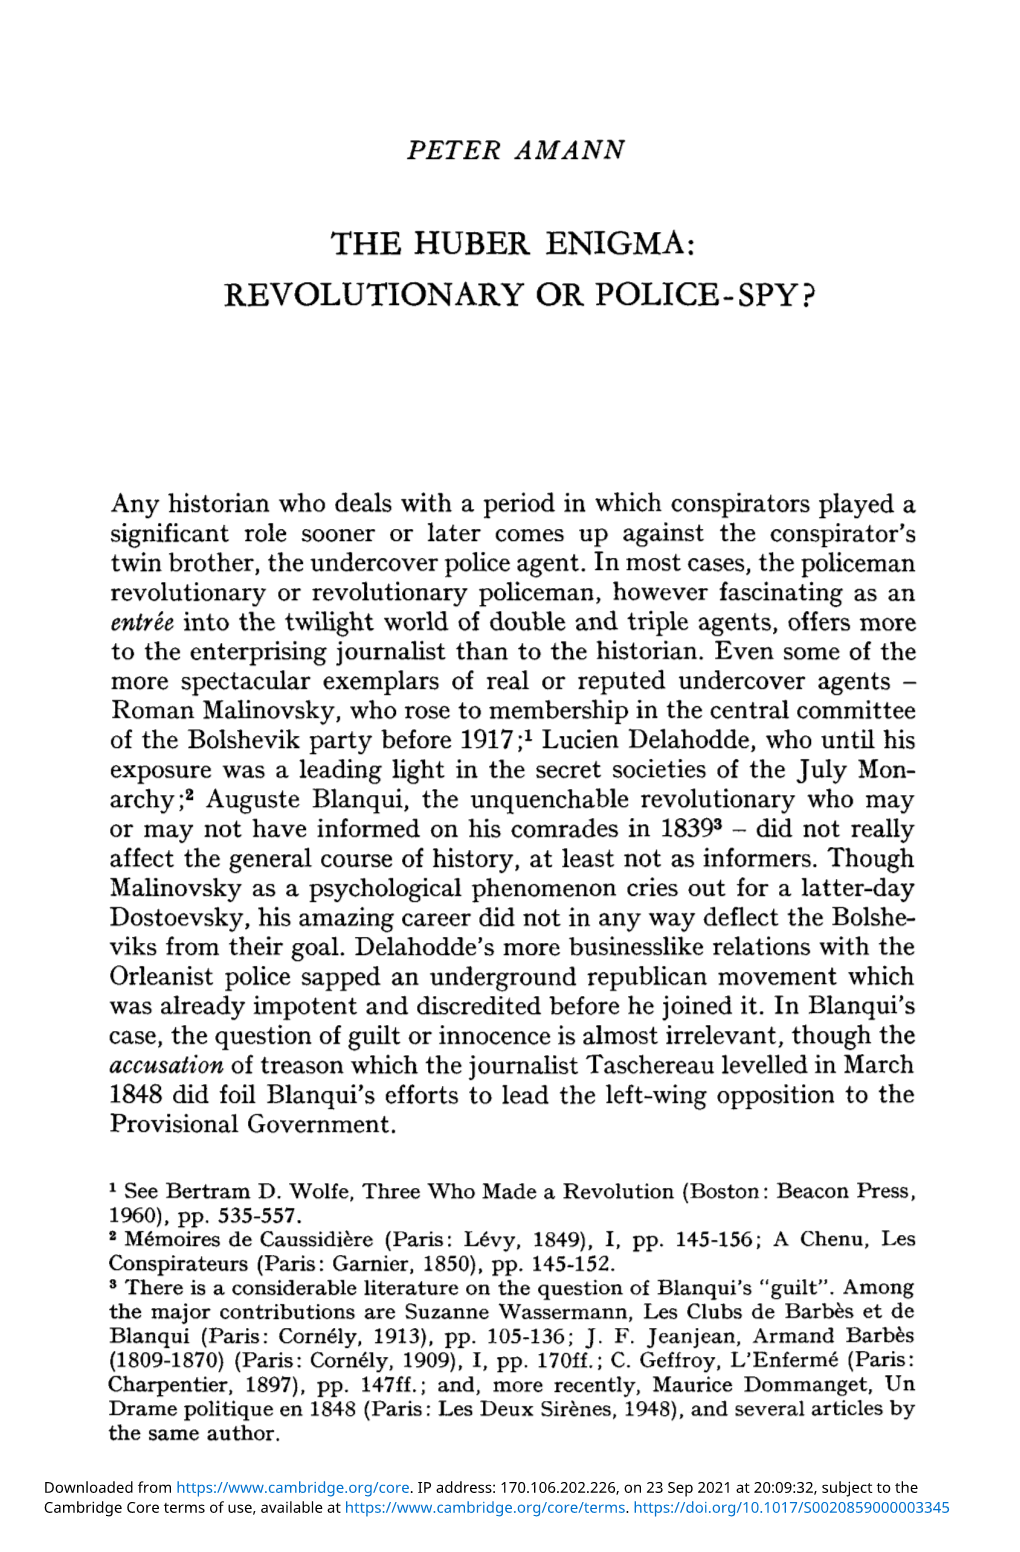 The Huber Enigma: Revolutionary Or Police-Spy?